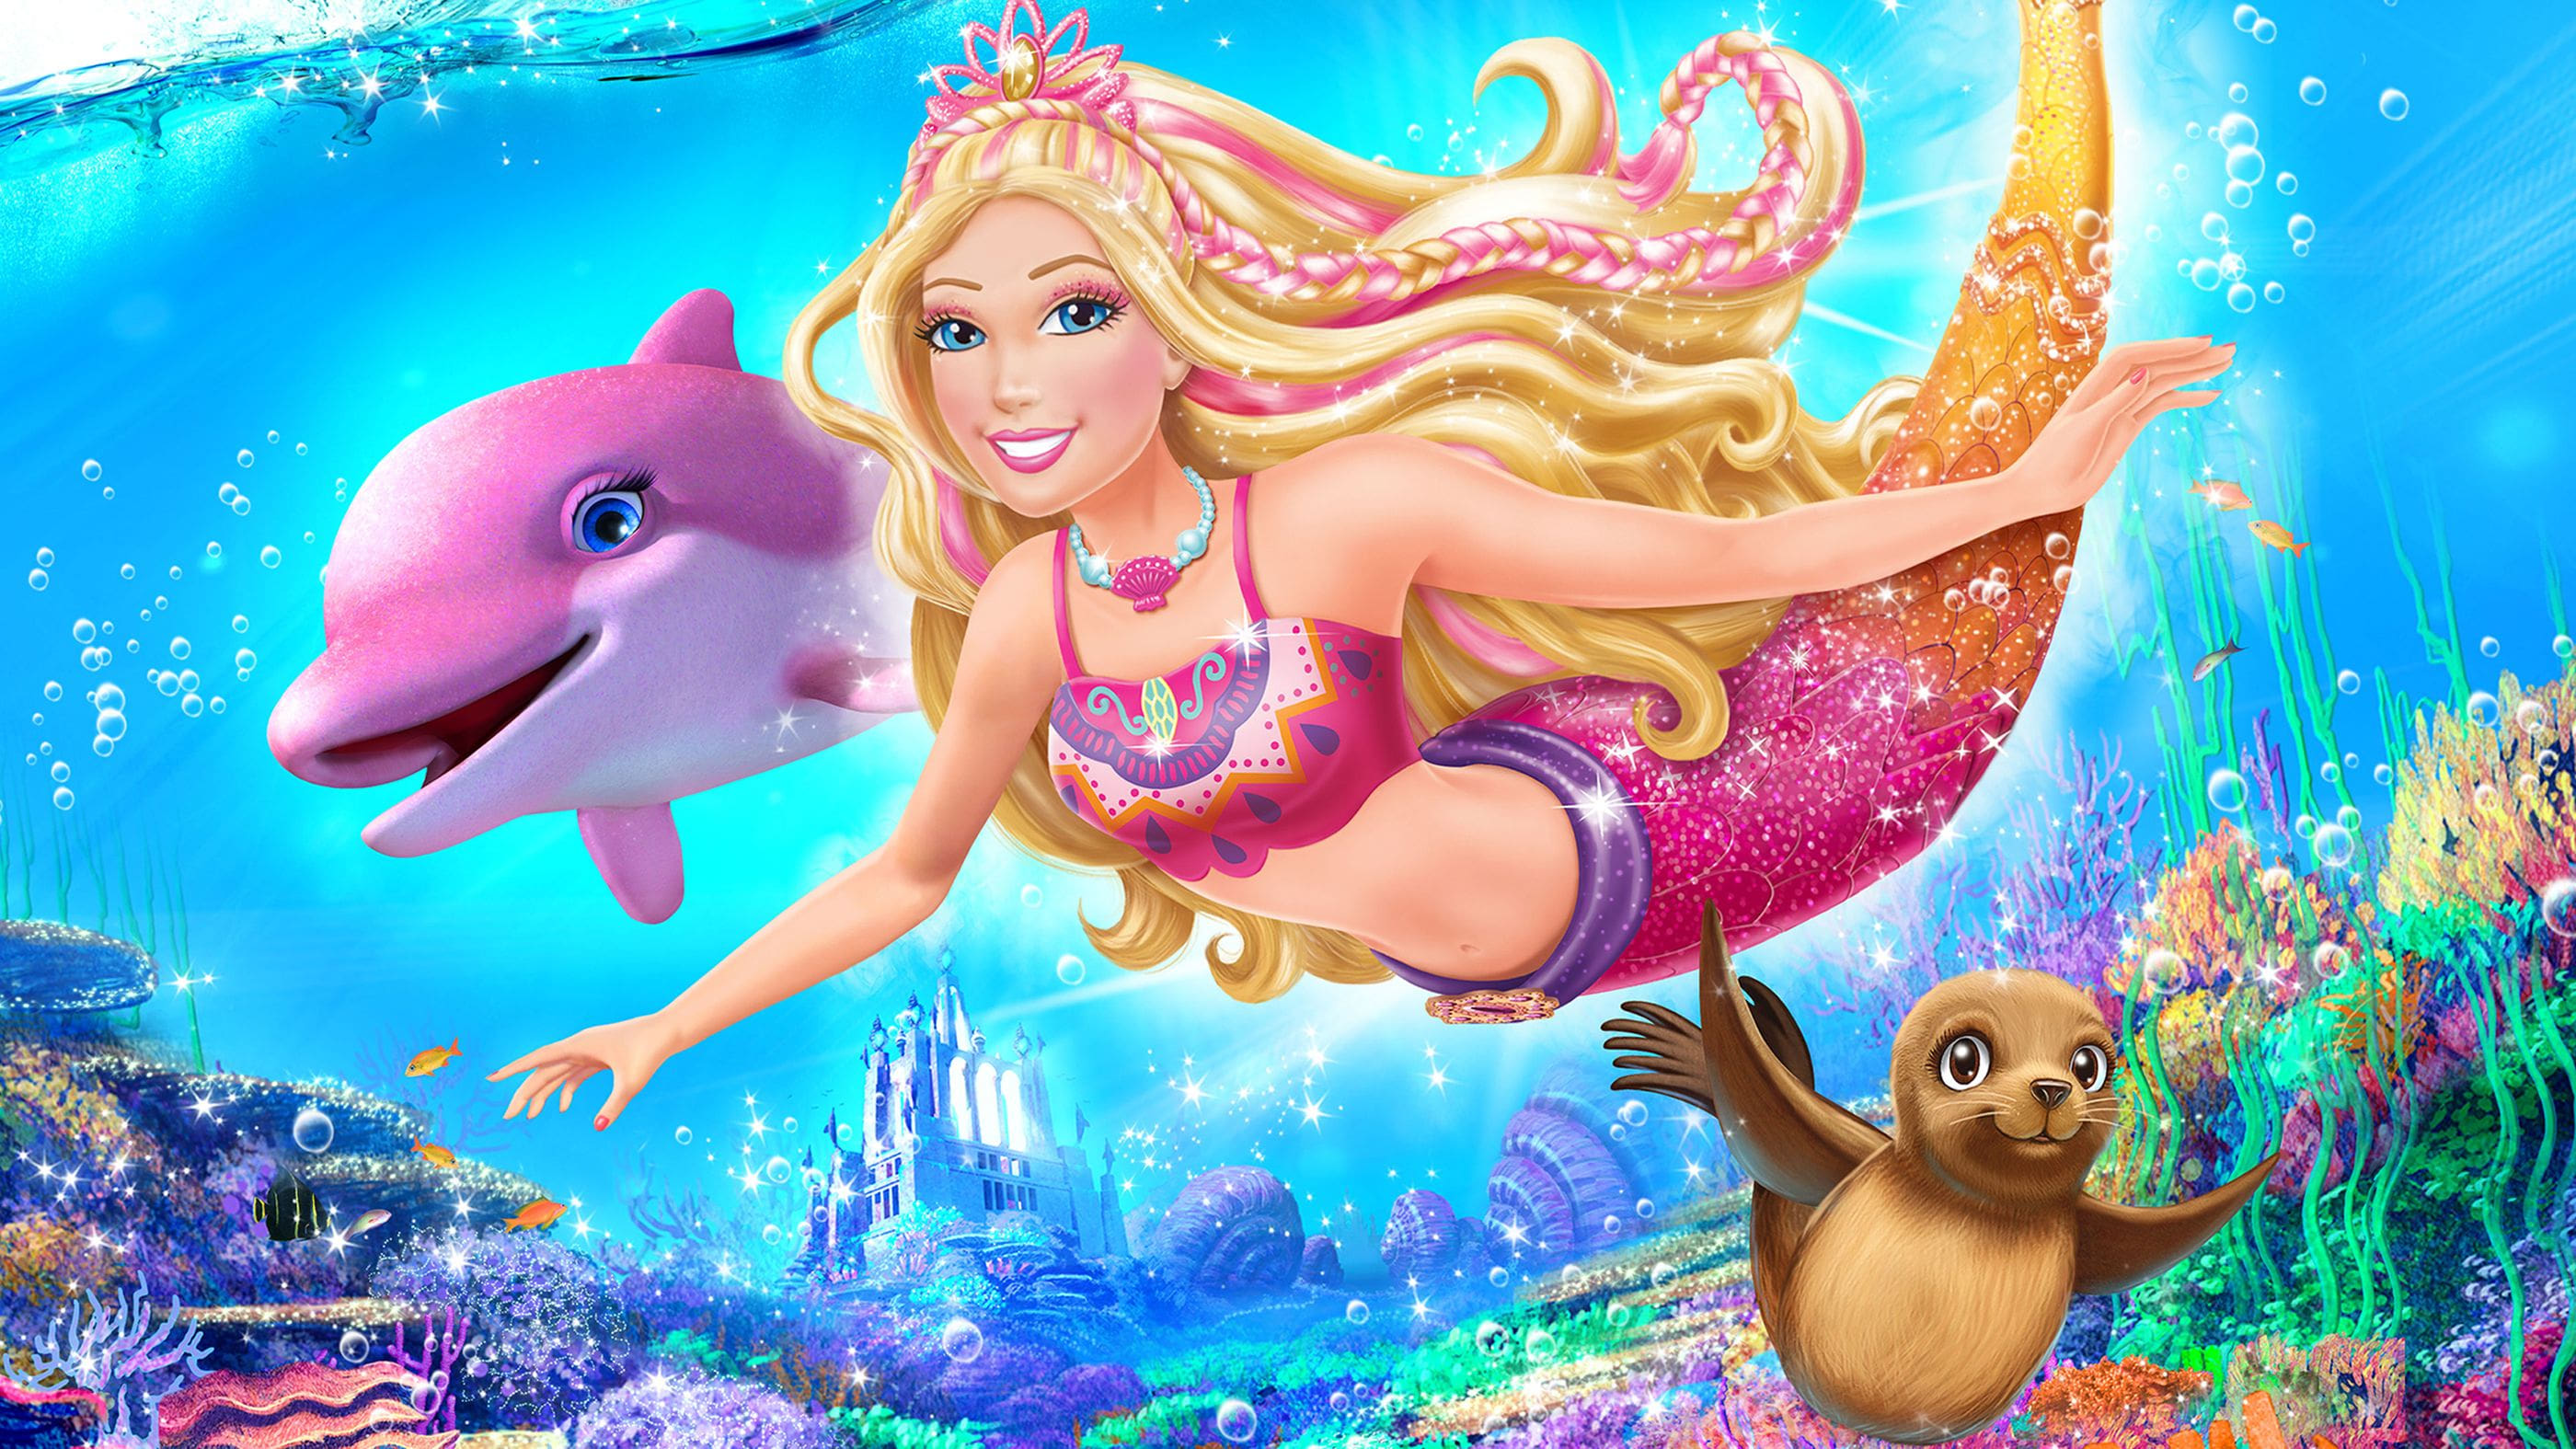 Poster Phim Barbie: Câu Chuyện Người Cá 2 (Barbie in A Mermaid Tale 2)